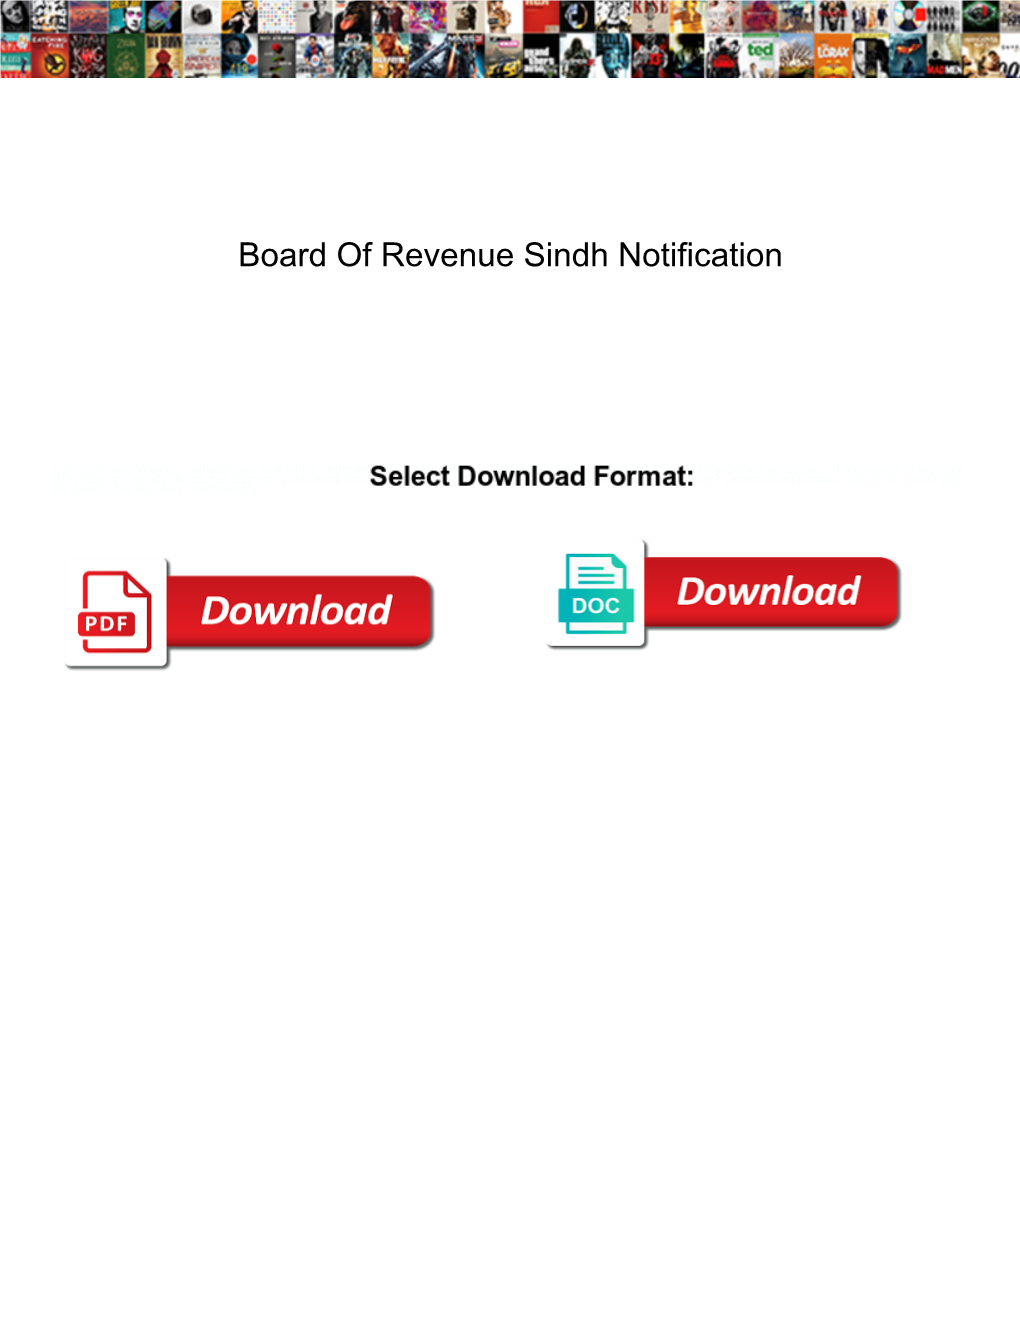 Board of Revenue Sindh Notification